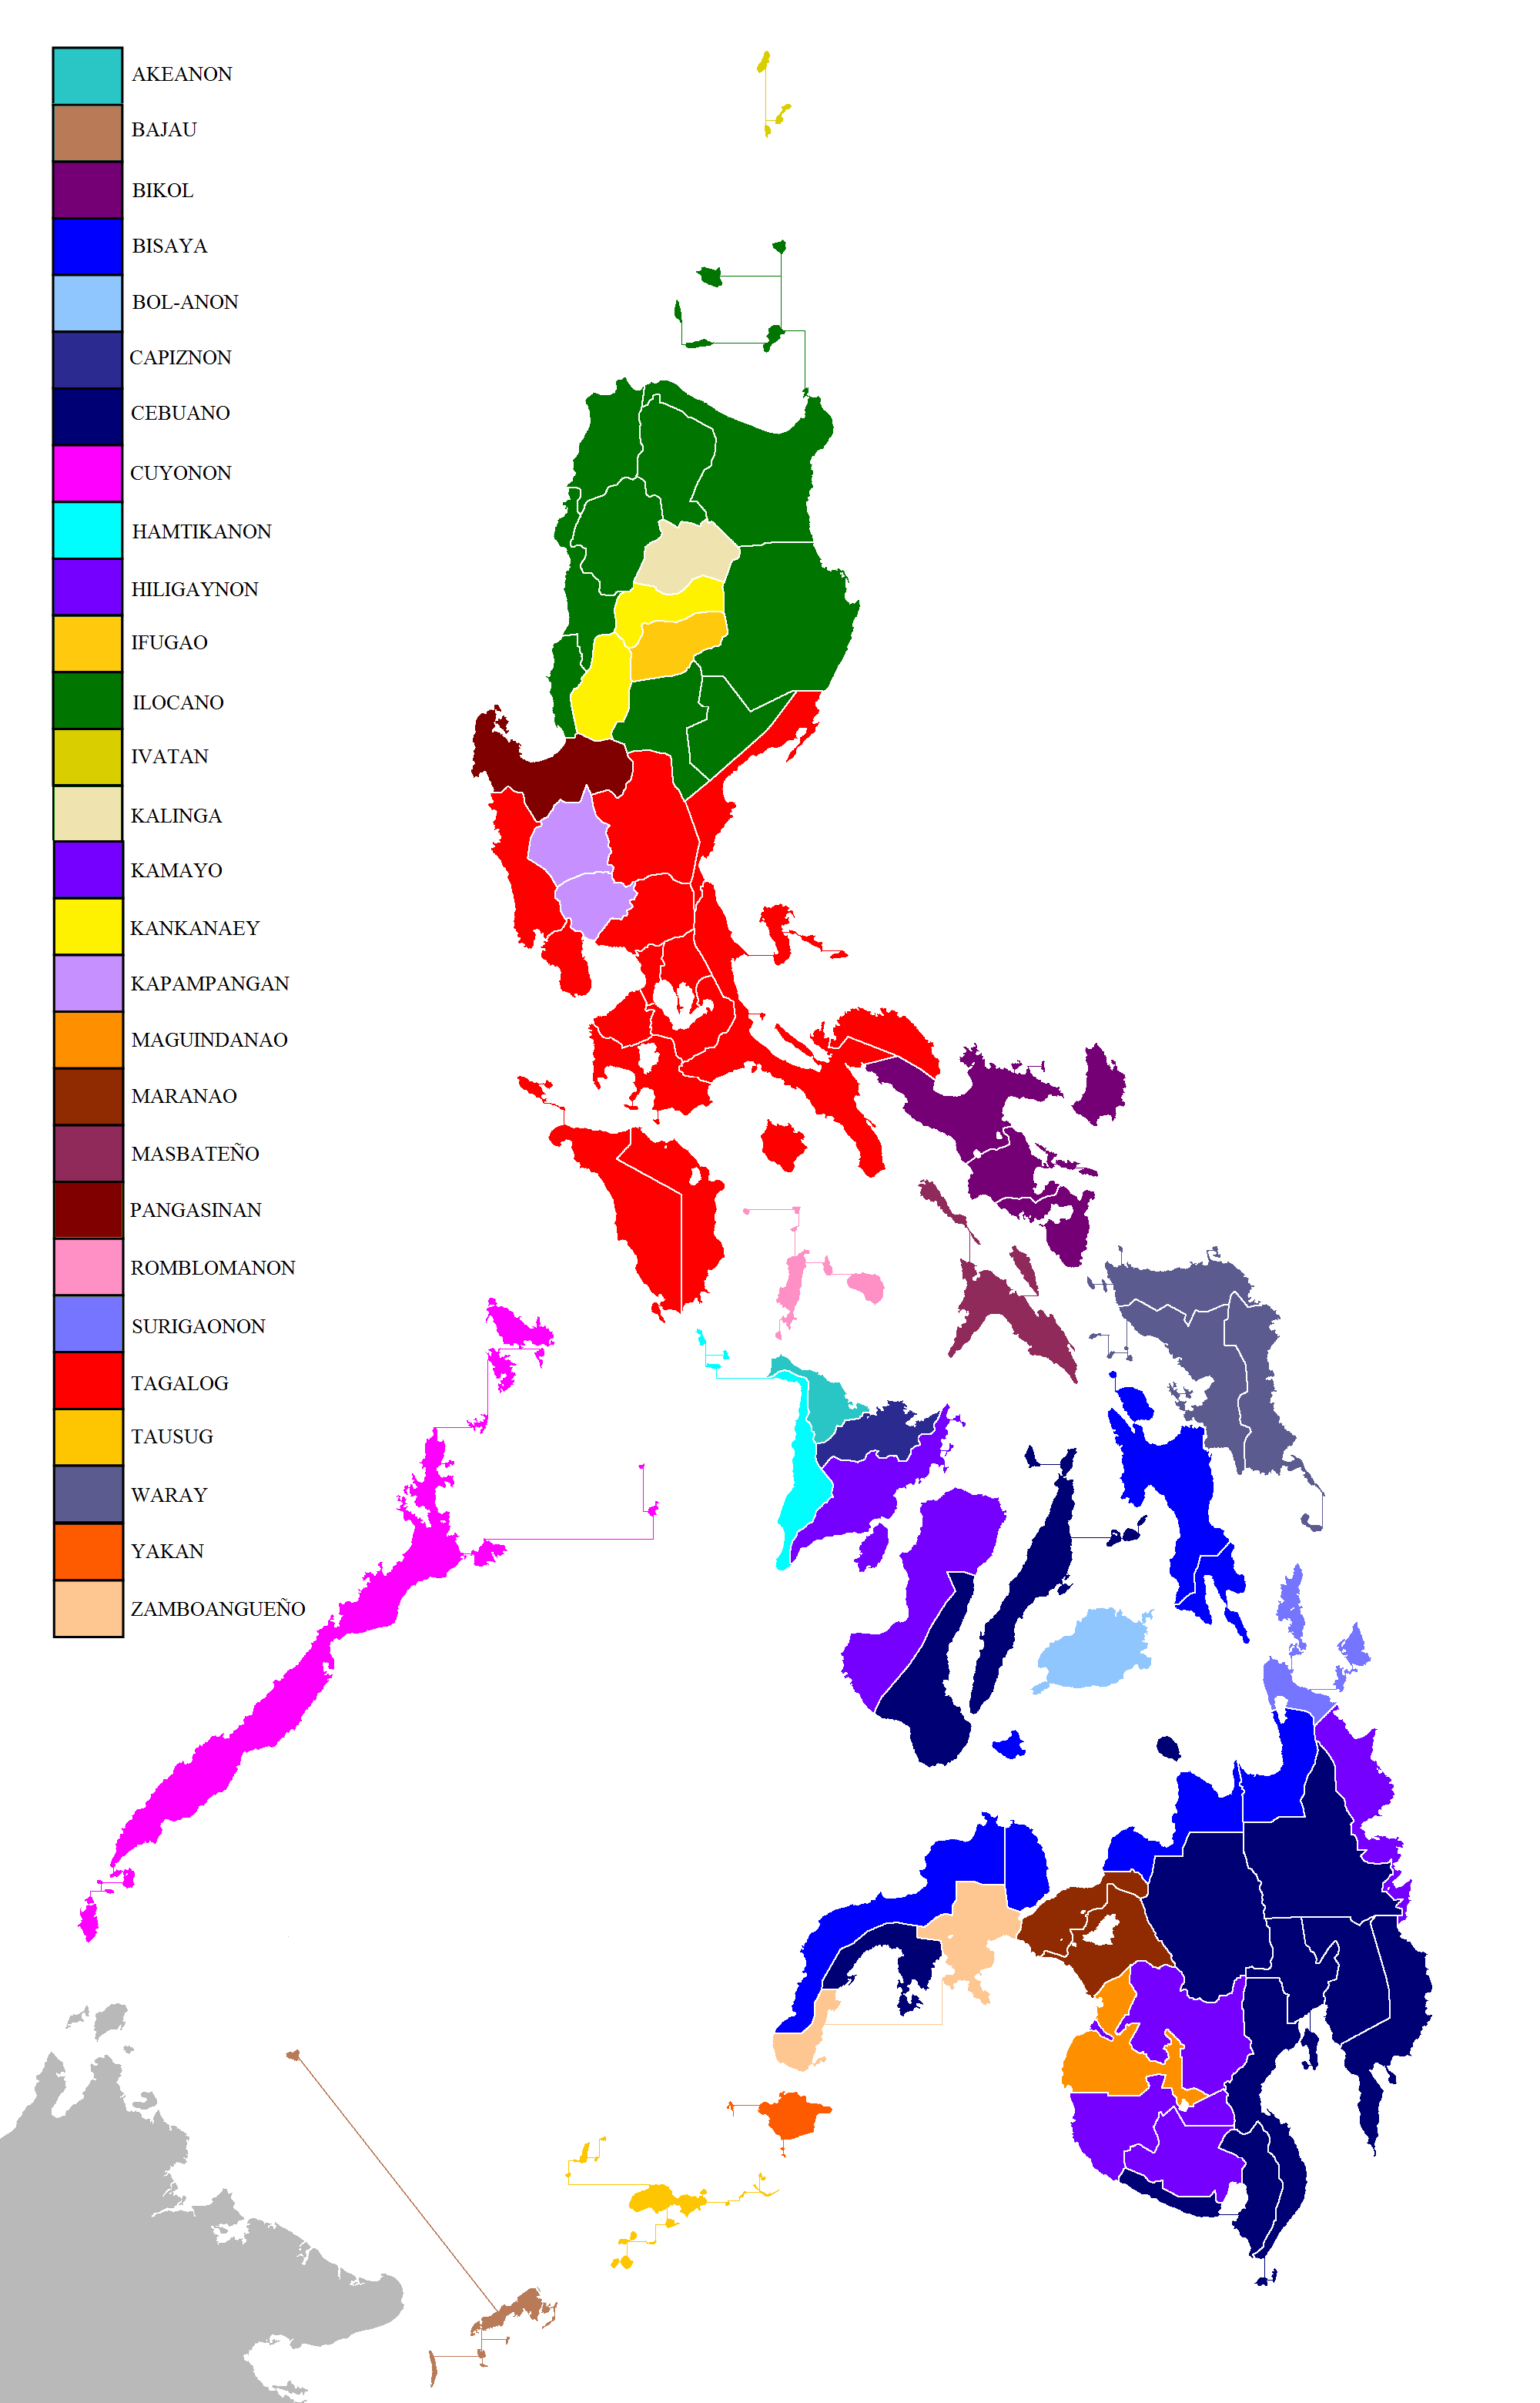 Philippines - Wikipedia, the free encyclopedia